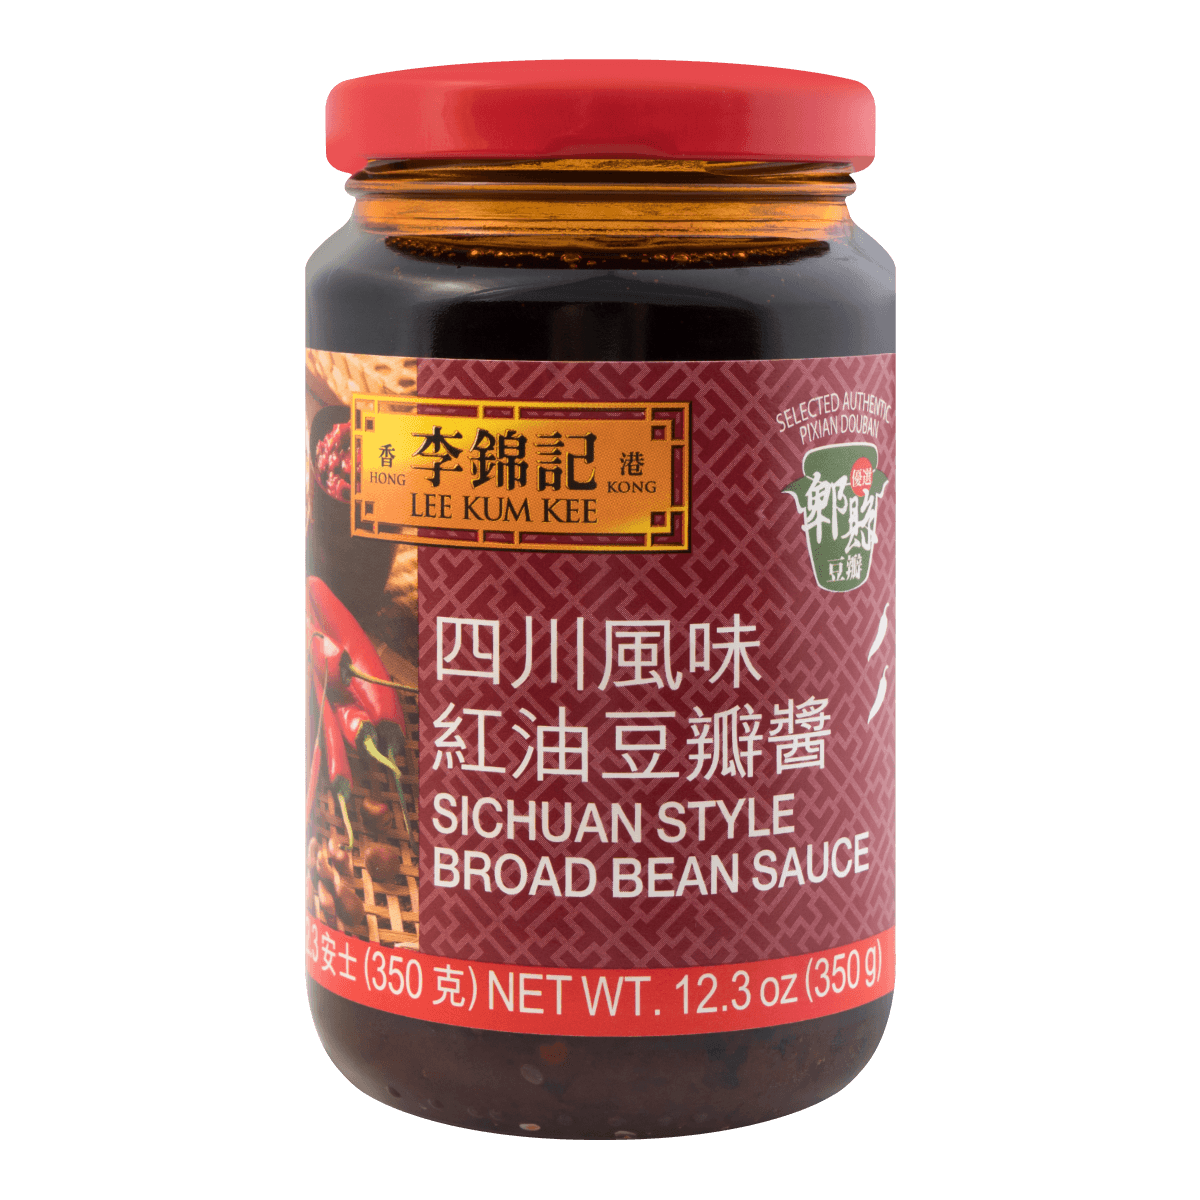 李锦记蒜蓉豆豉酱368gLKK’s Black Bean Garlic Sauce – Five continents international